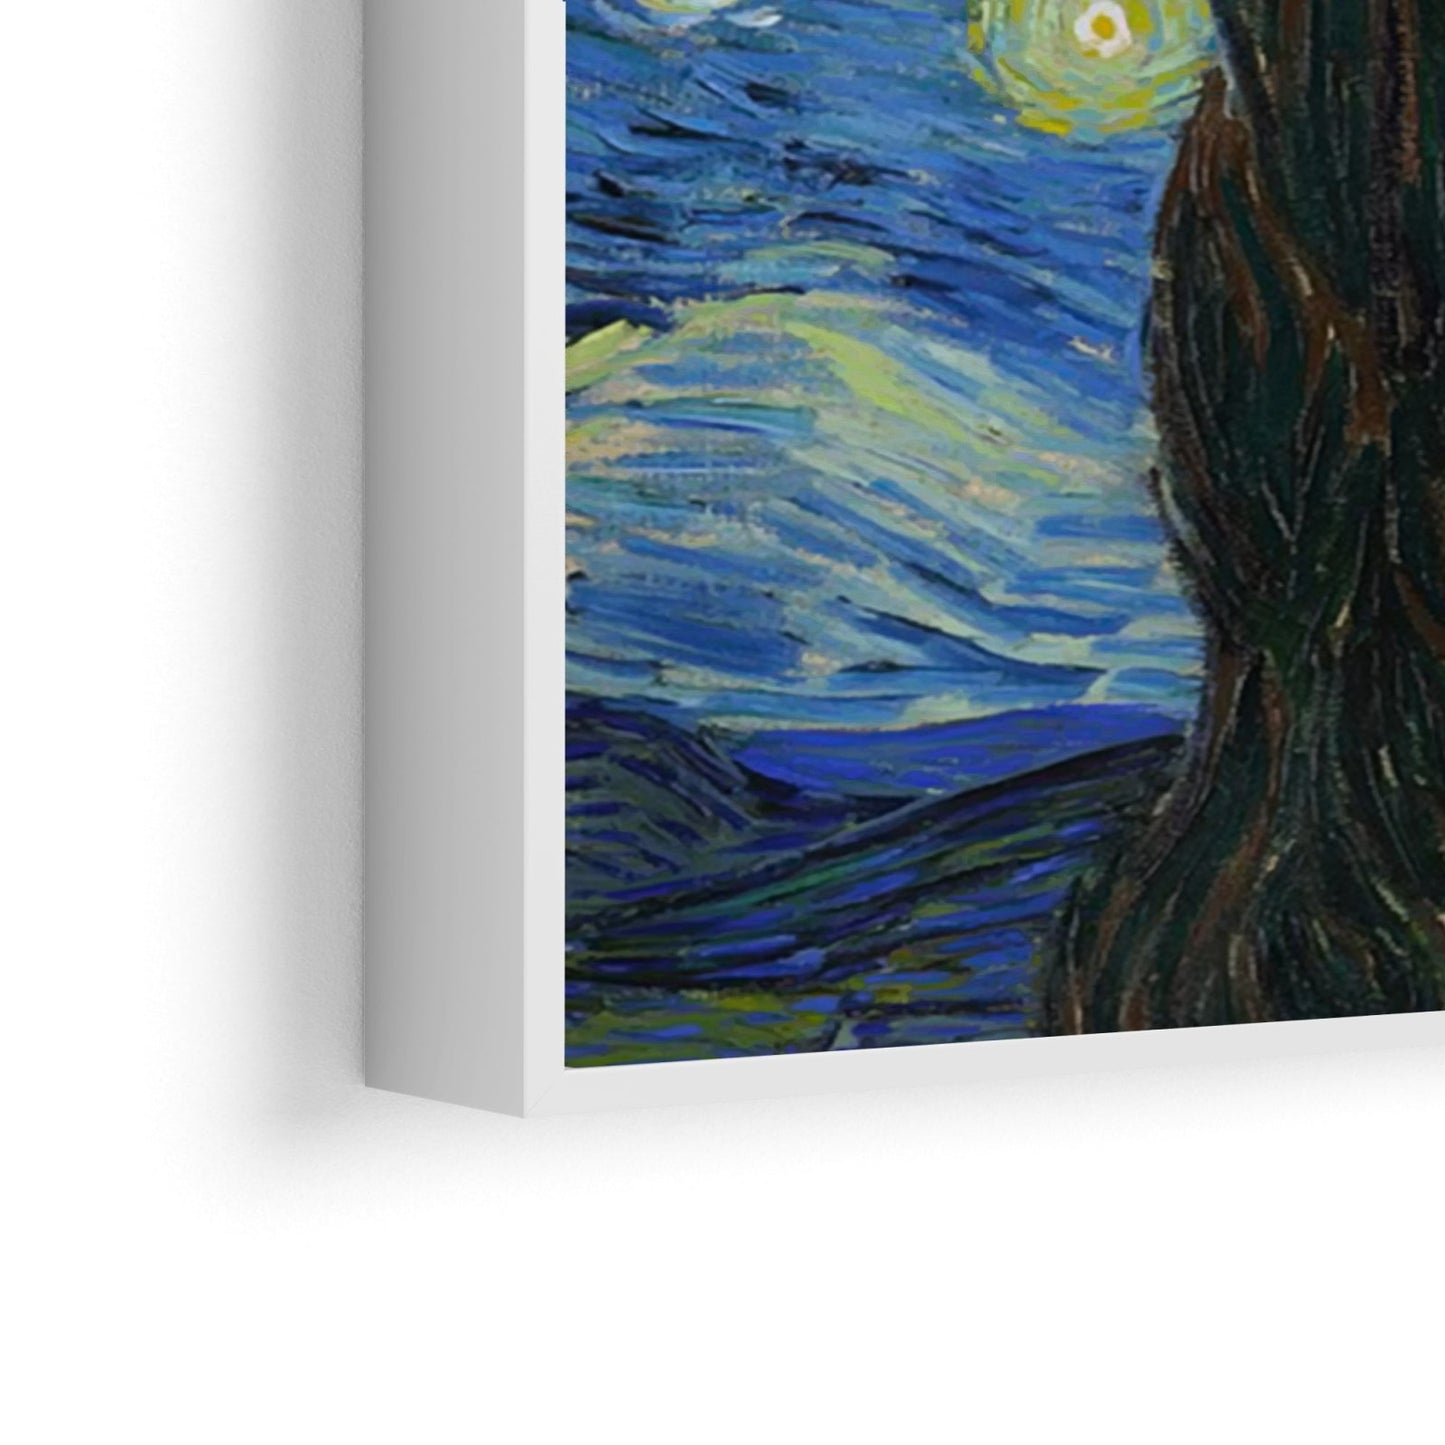 Gwiaździsta noc, Vincent Van Gogh